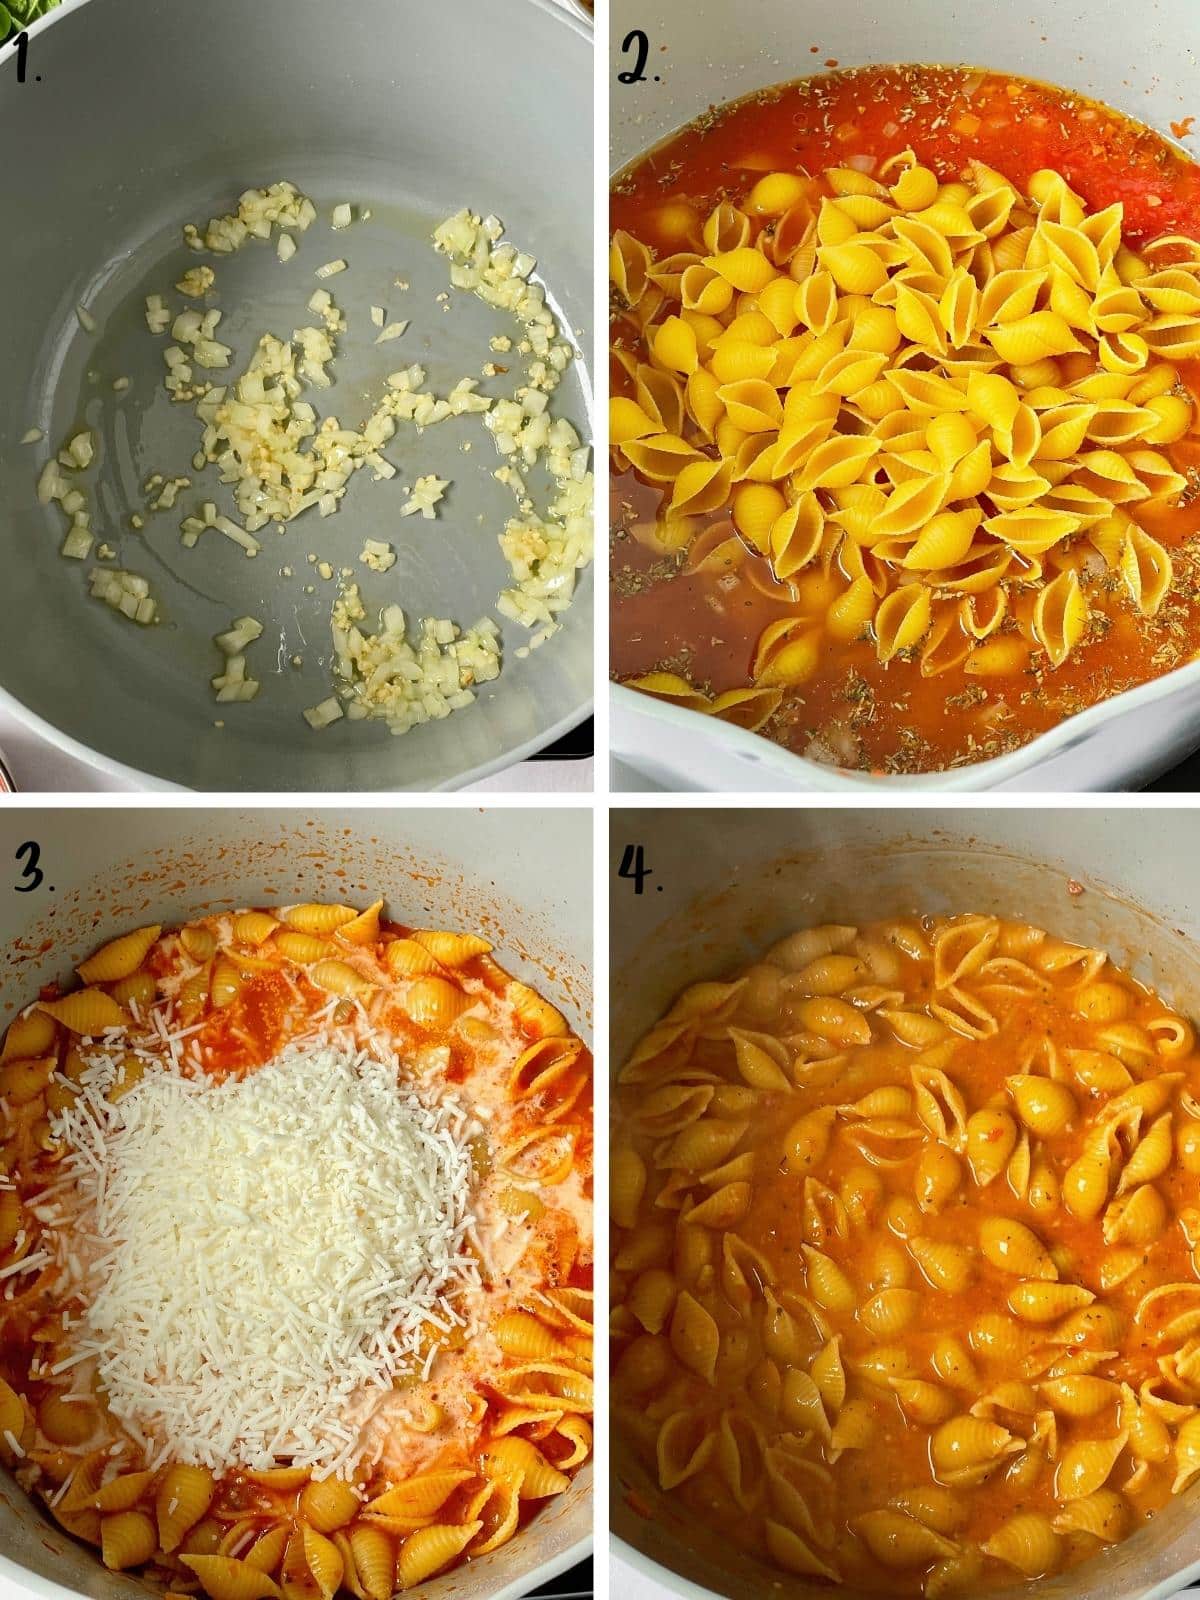 Steps for making tomato pasta.